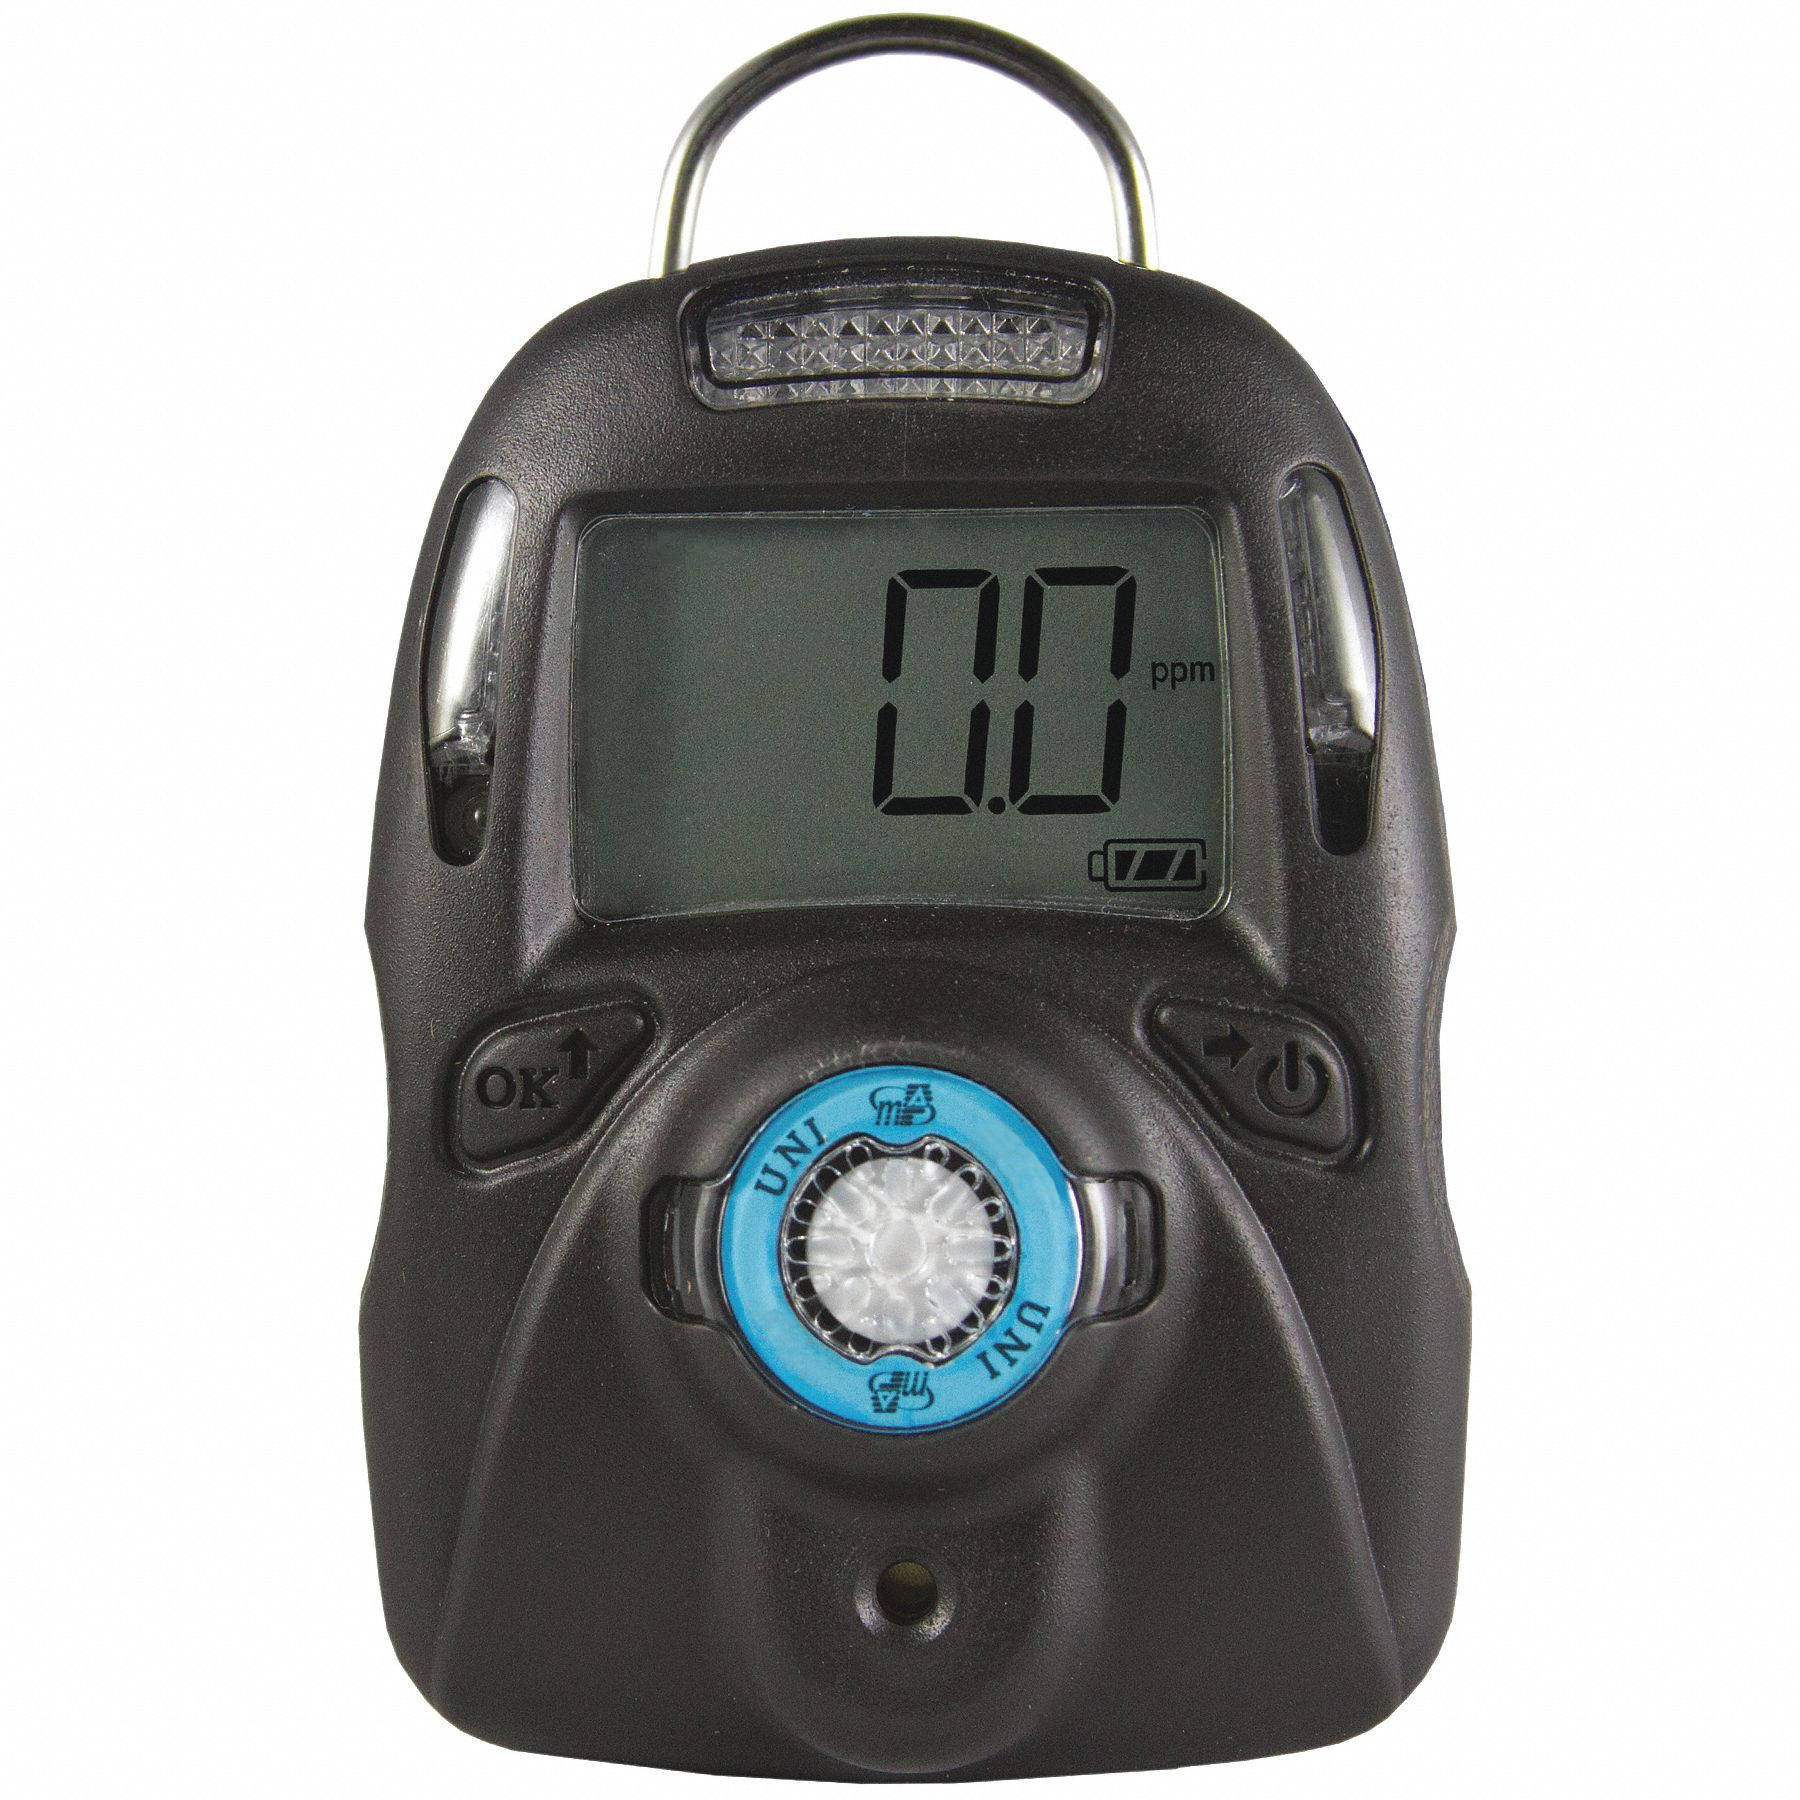 Portable Gas Detector mPower model MP100